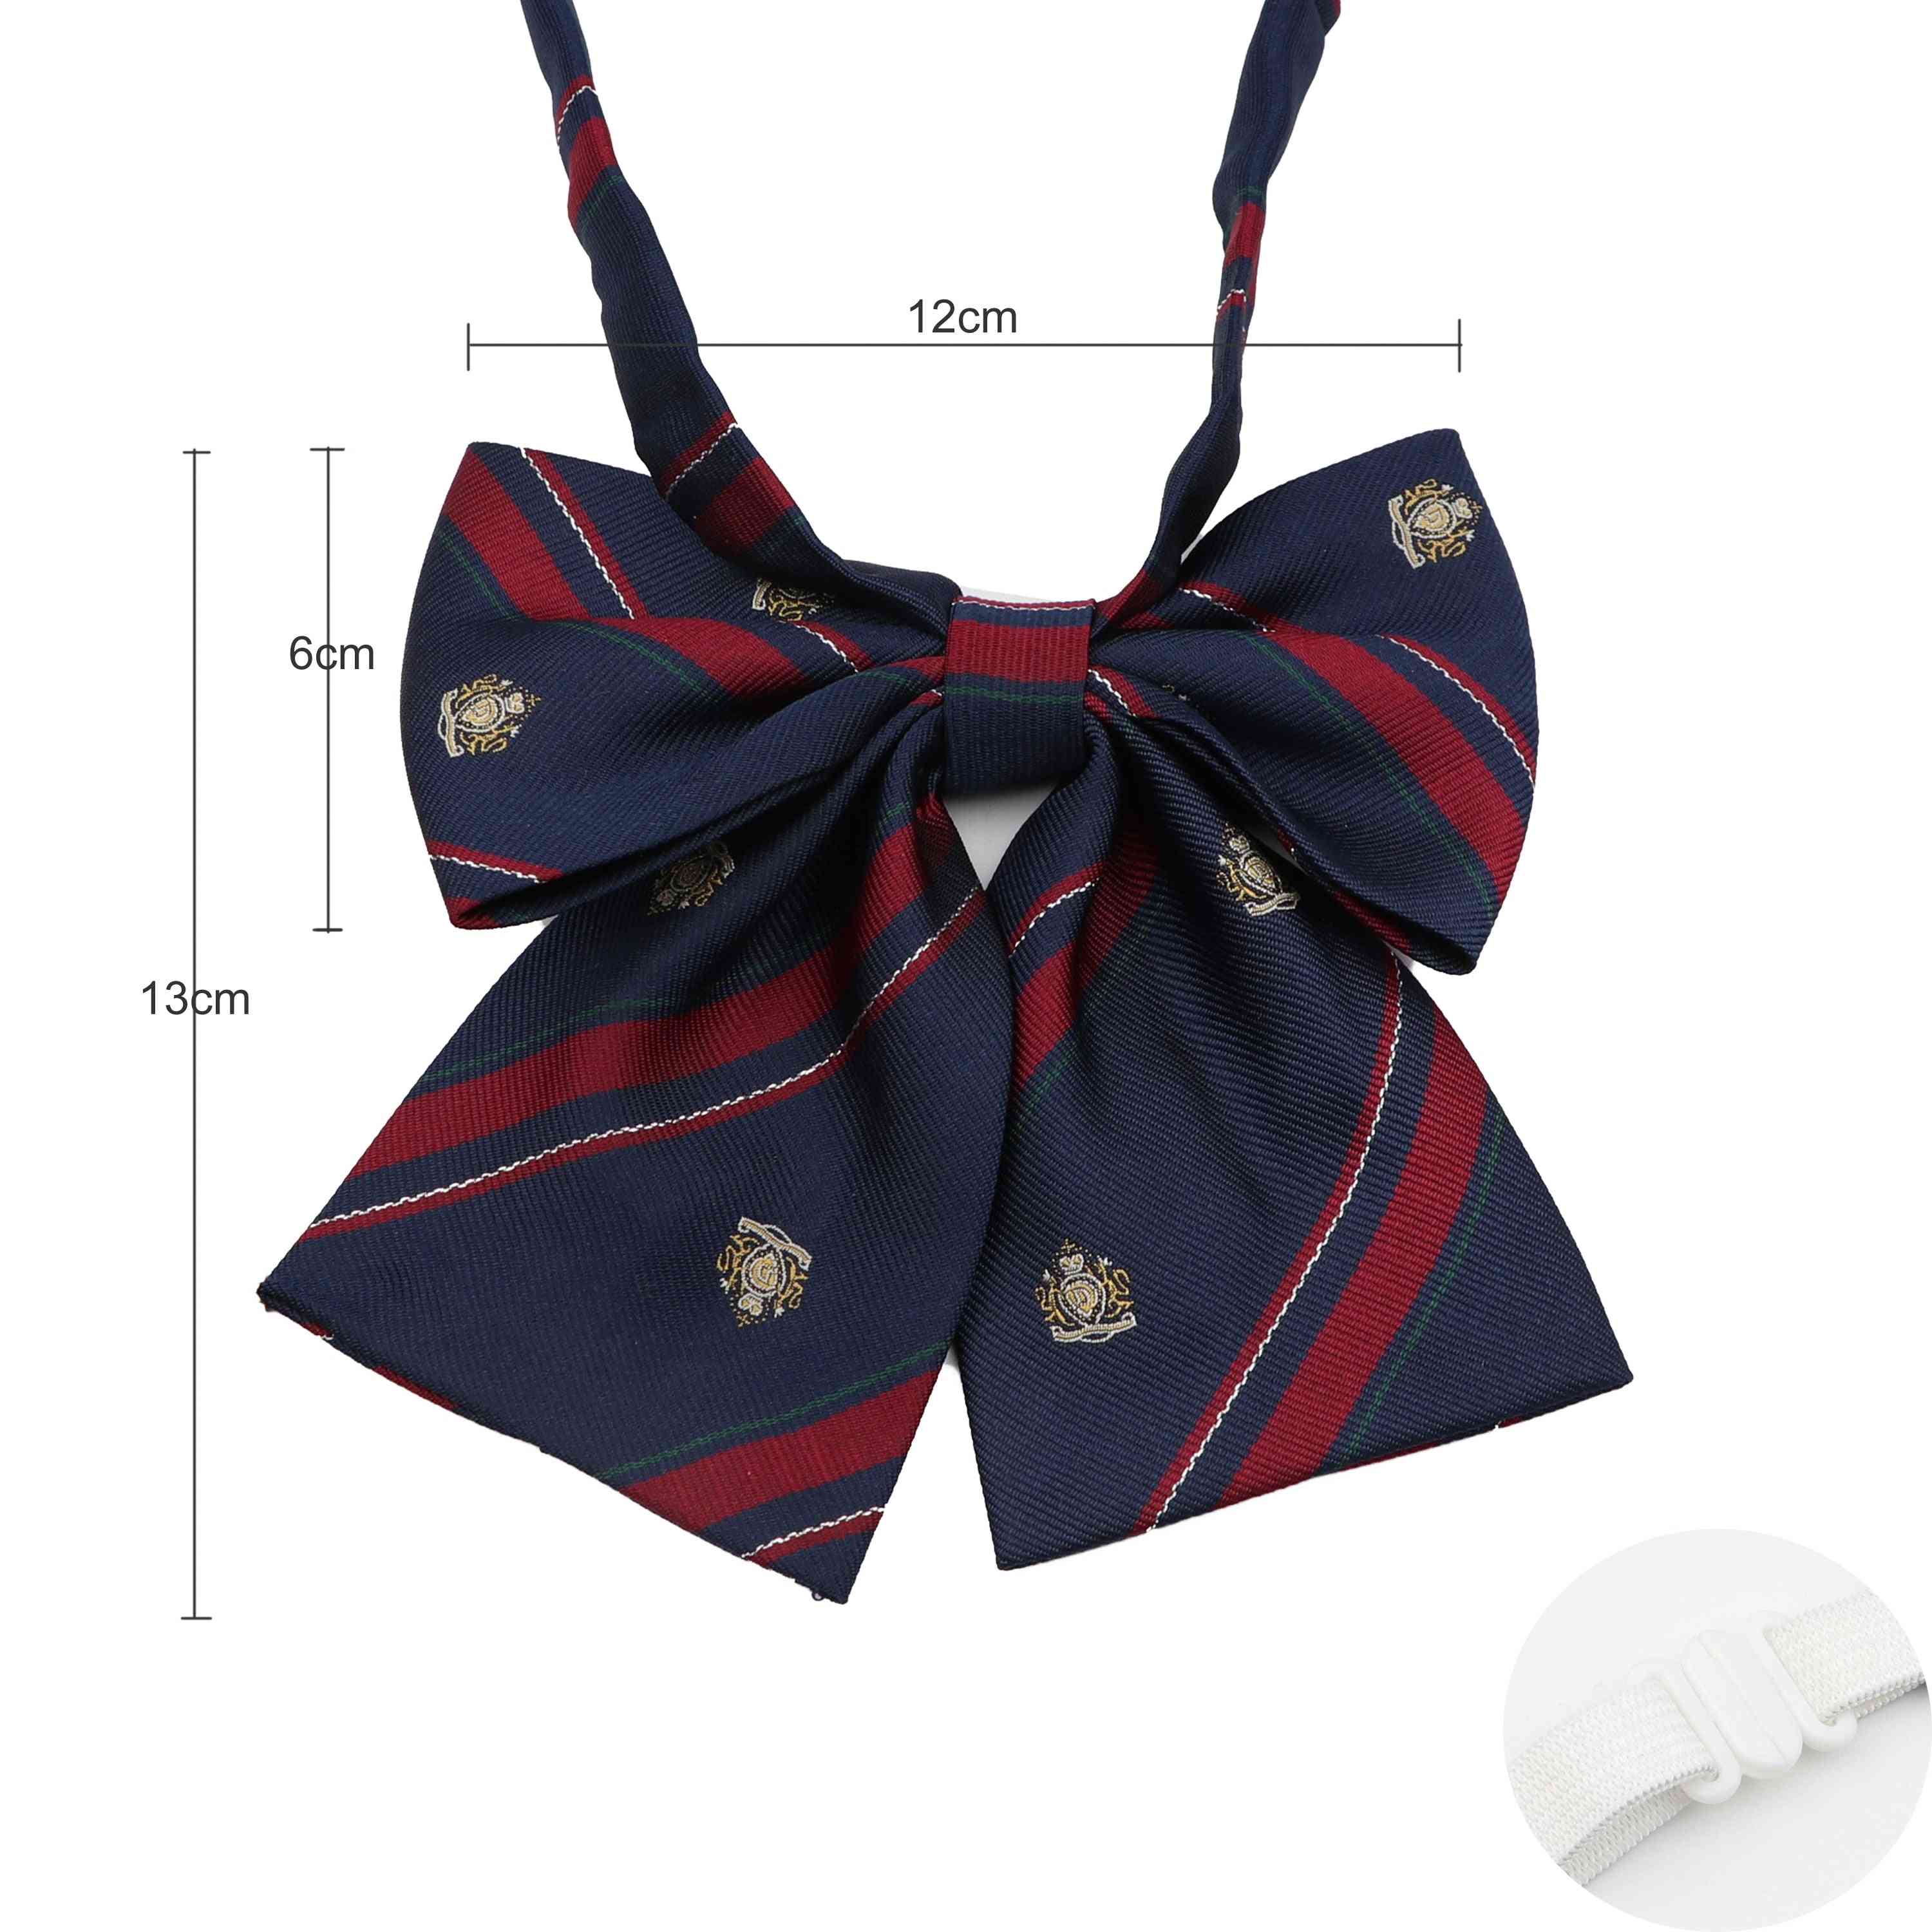 Girl, Boy Summer School, Formal Necktie For Student,